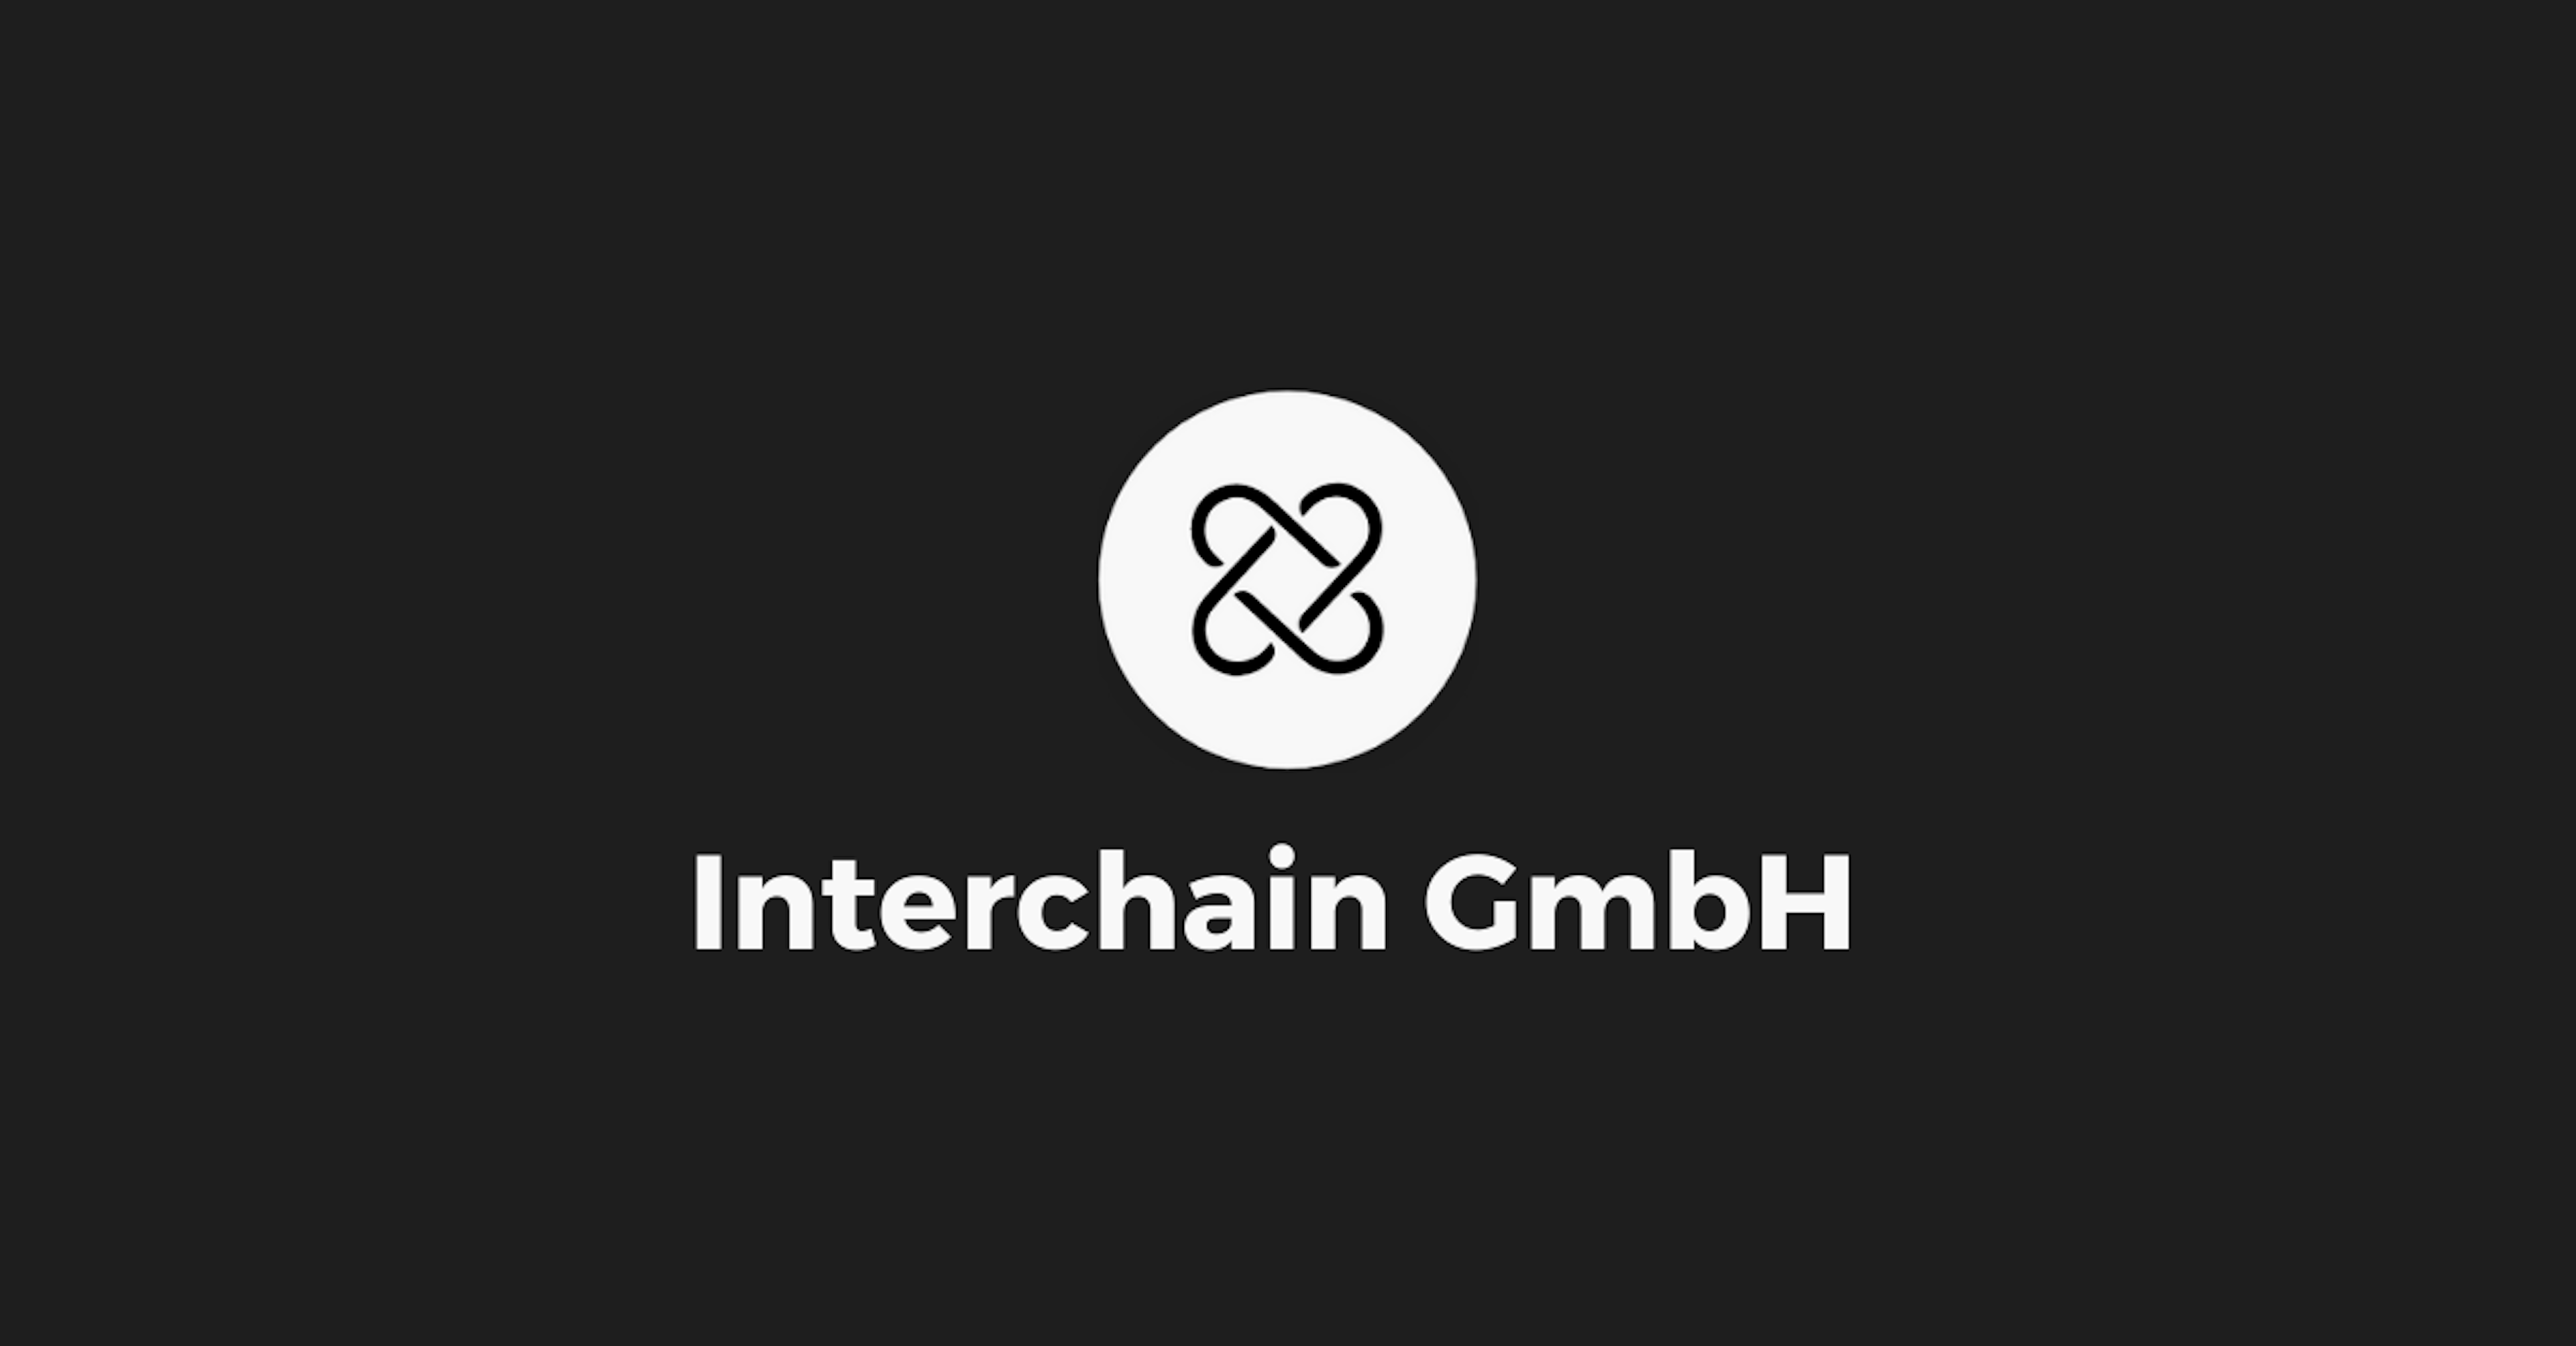 Working at Interchain GmbH - Build the Internet of Blockchains